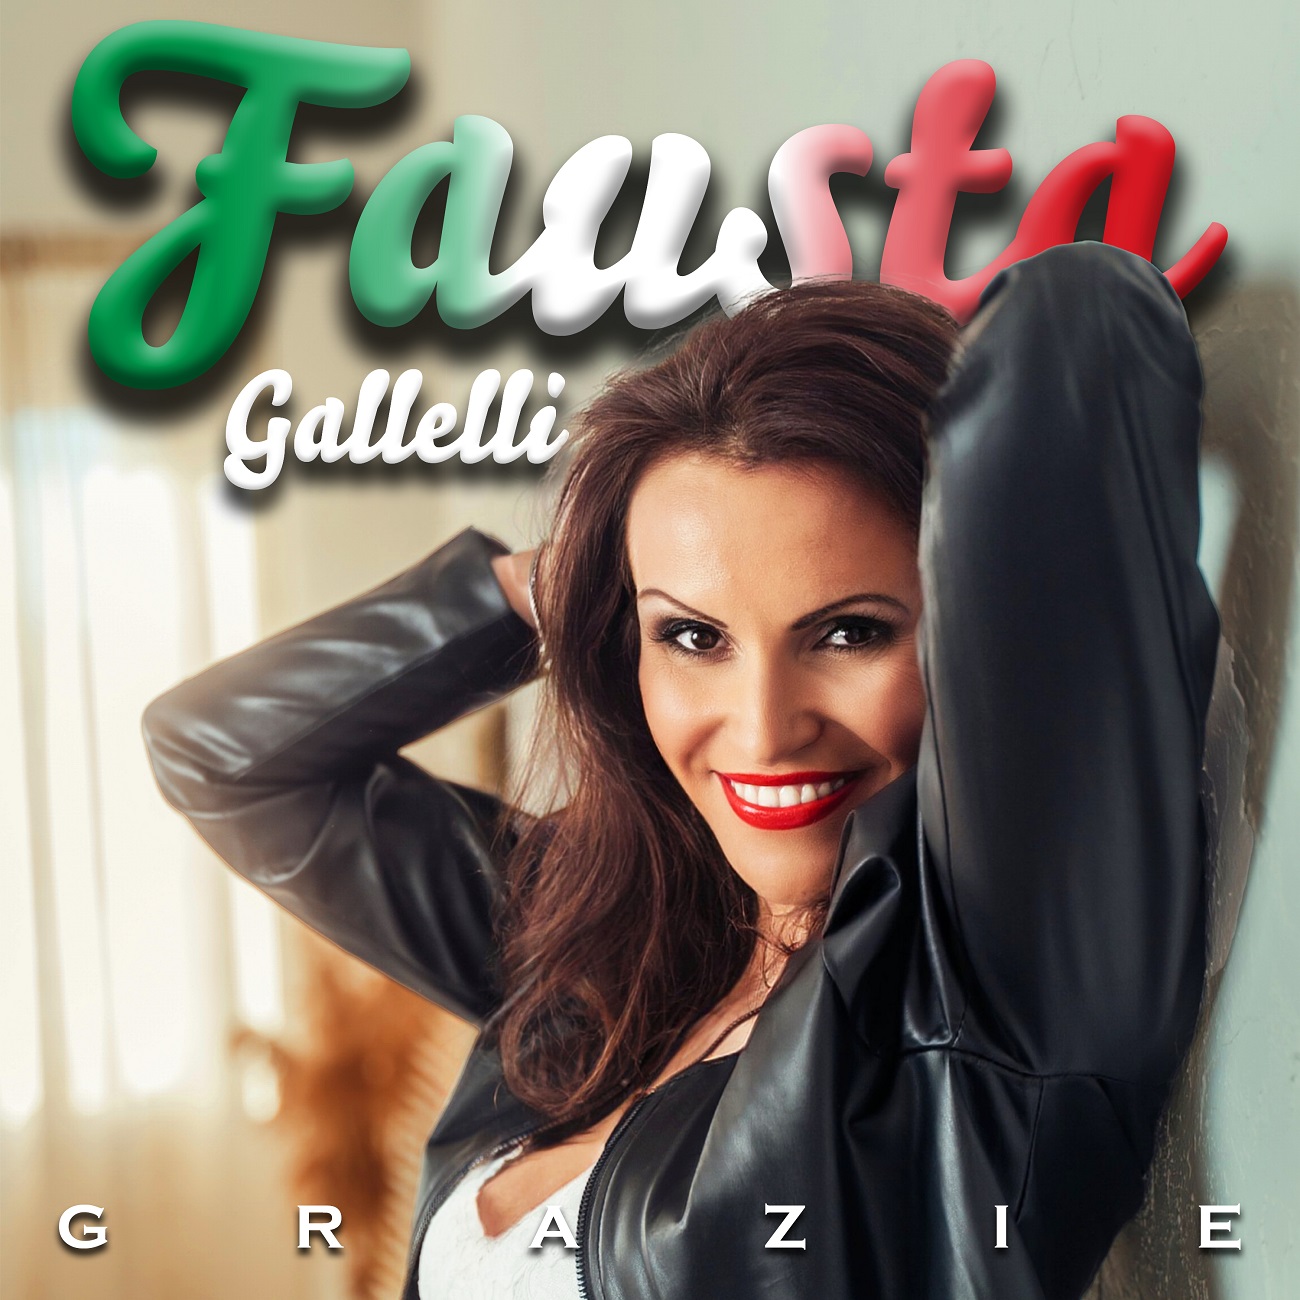 Fausta Gallelli - Grazie - cover.jpg